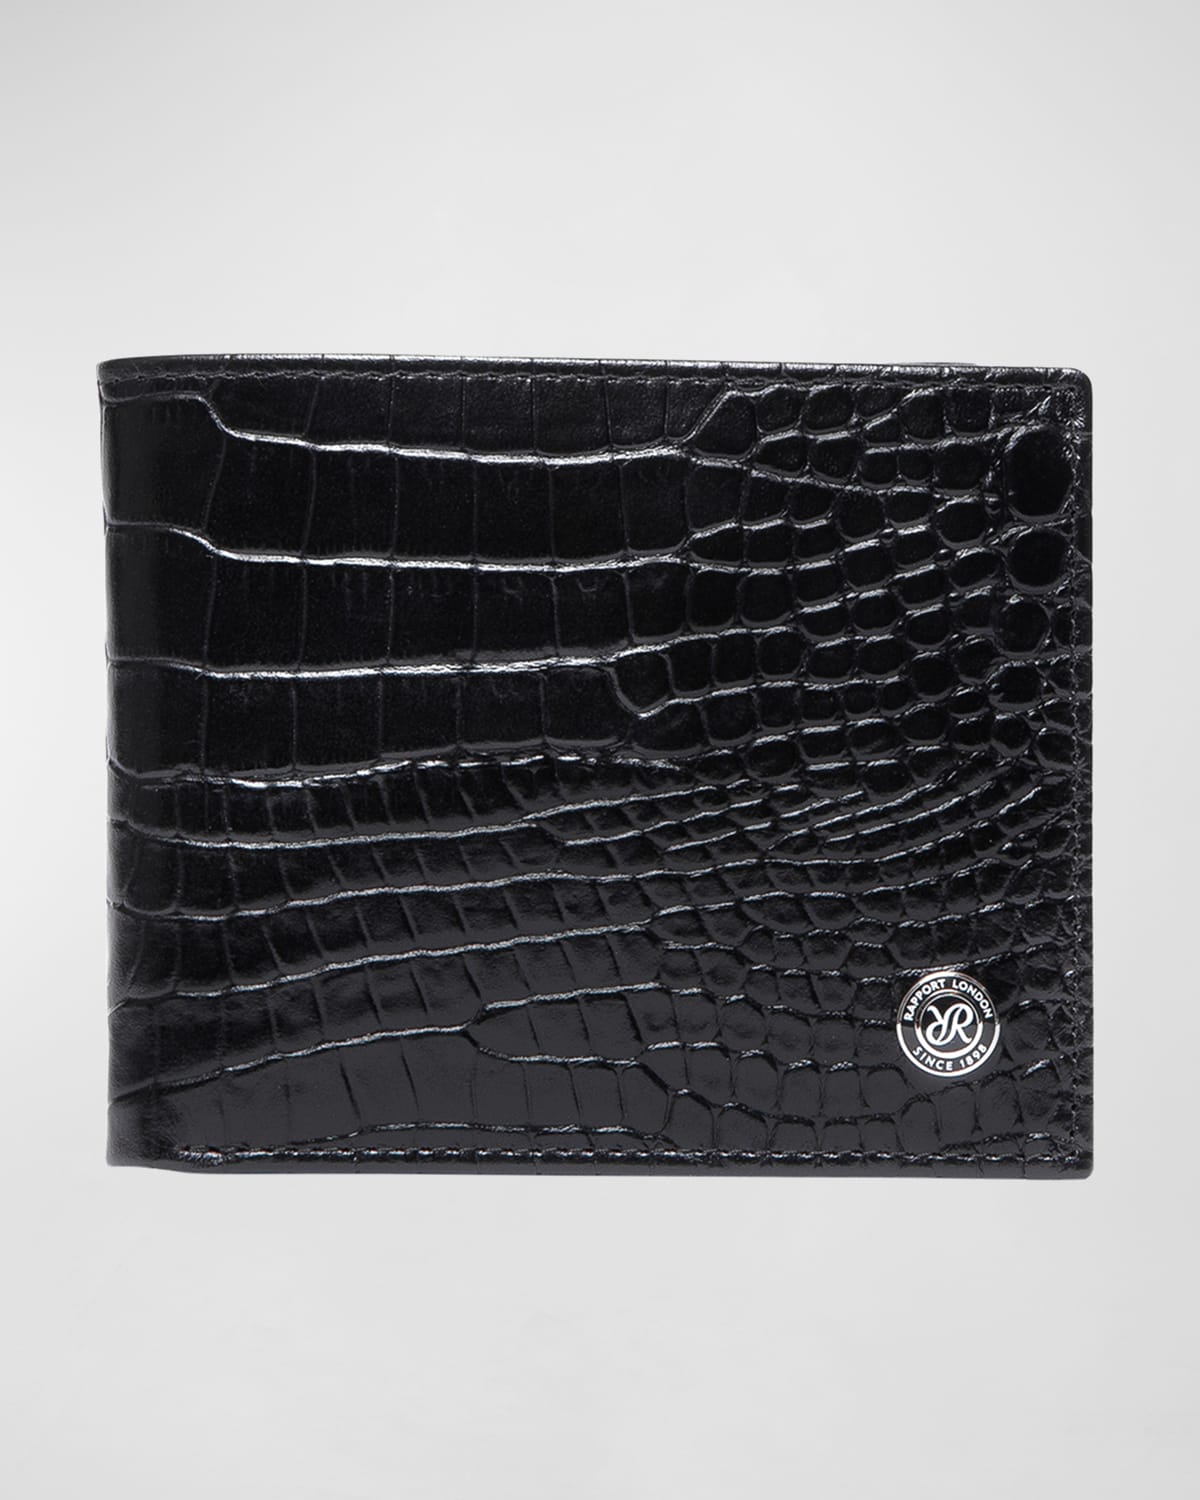 Black Leather Billfold Wallet